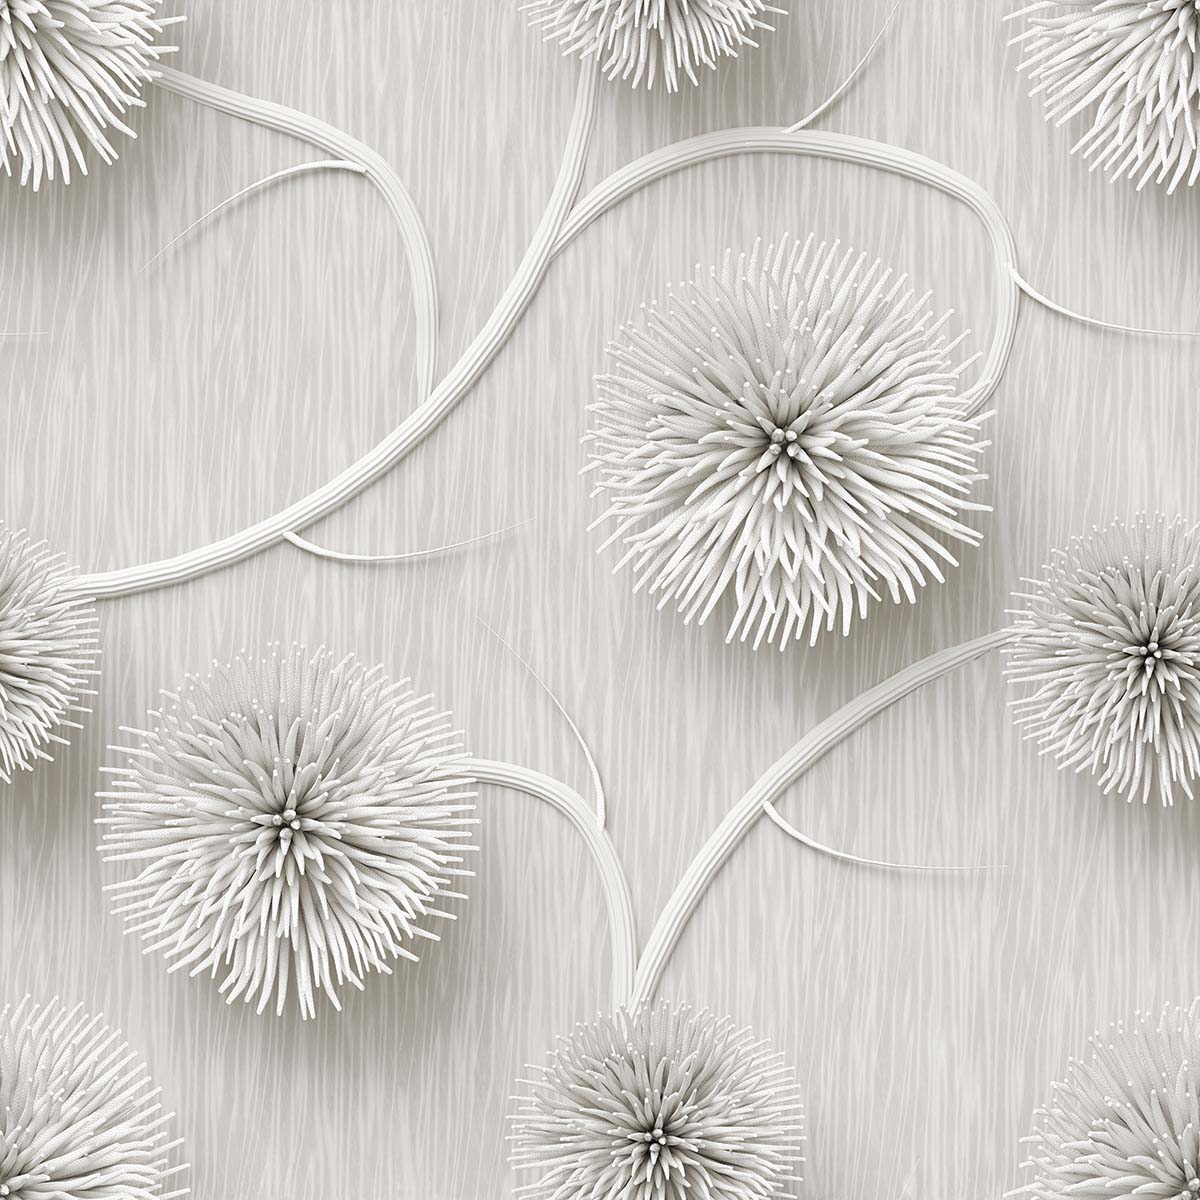 A white flower design on a white background